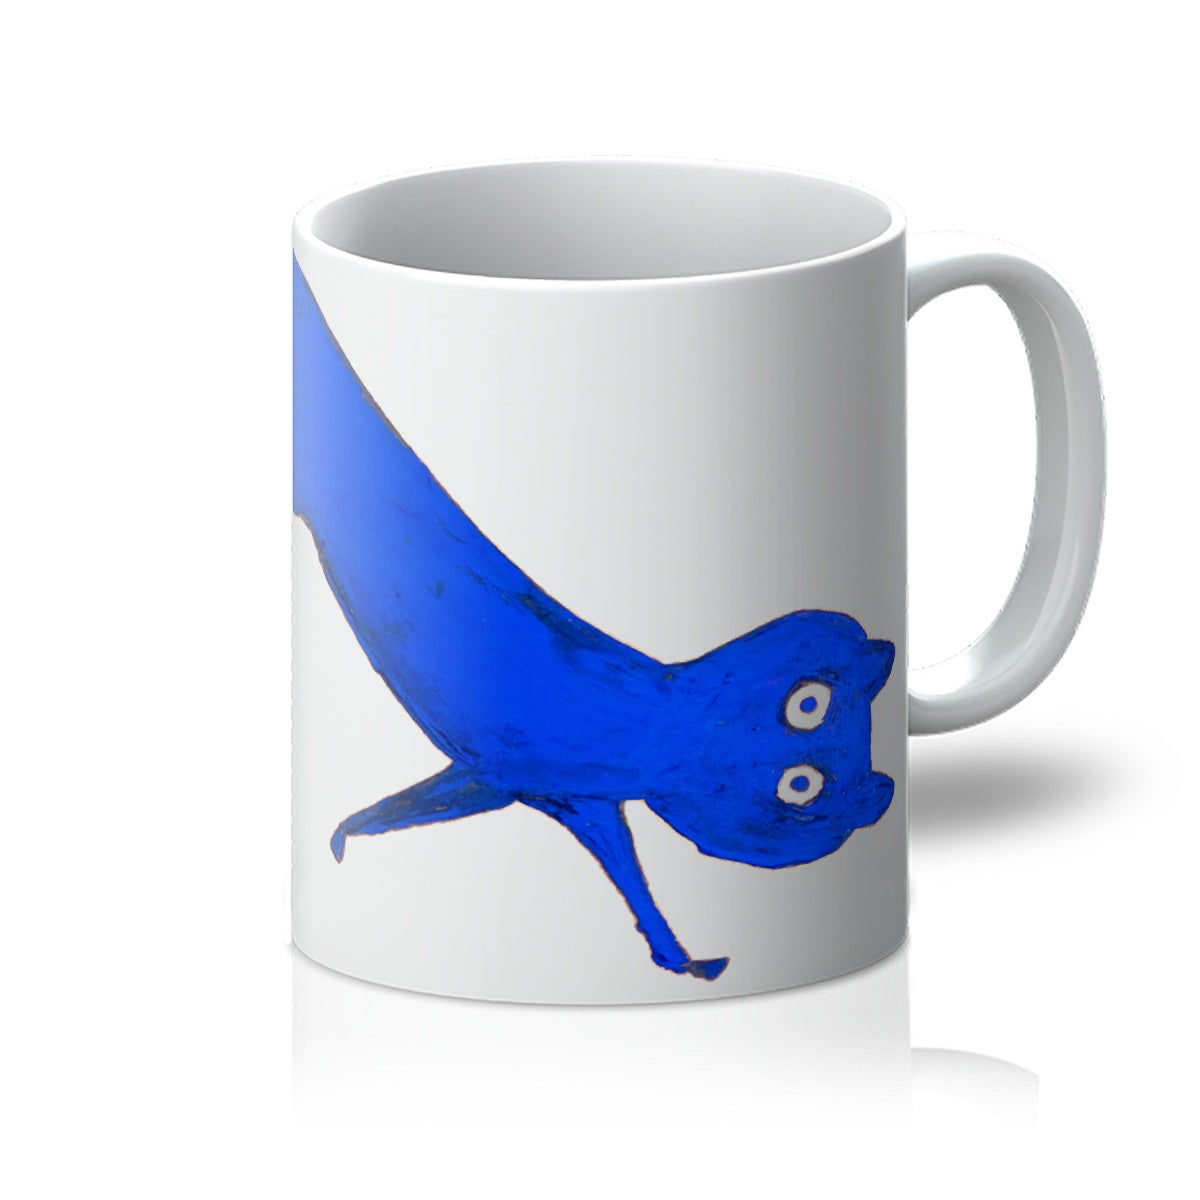 Blue Cat by Bill Traylor, c.1941 - Mug